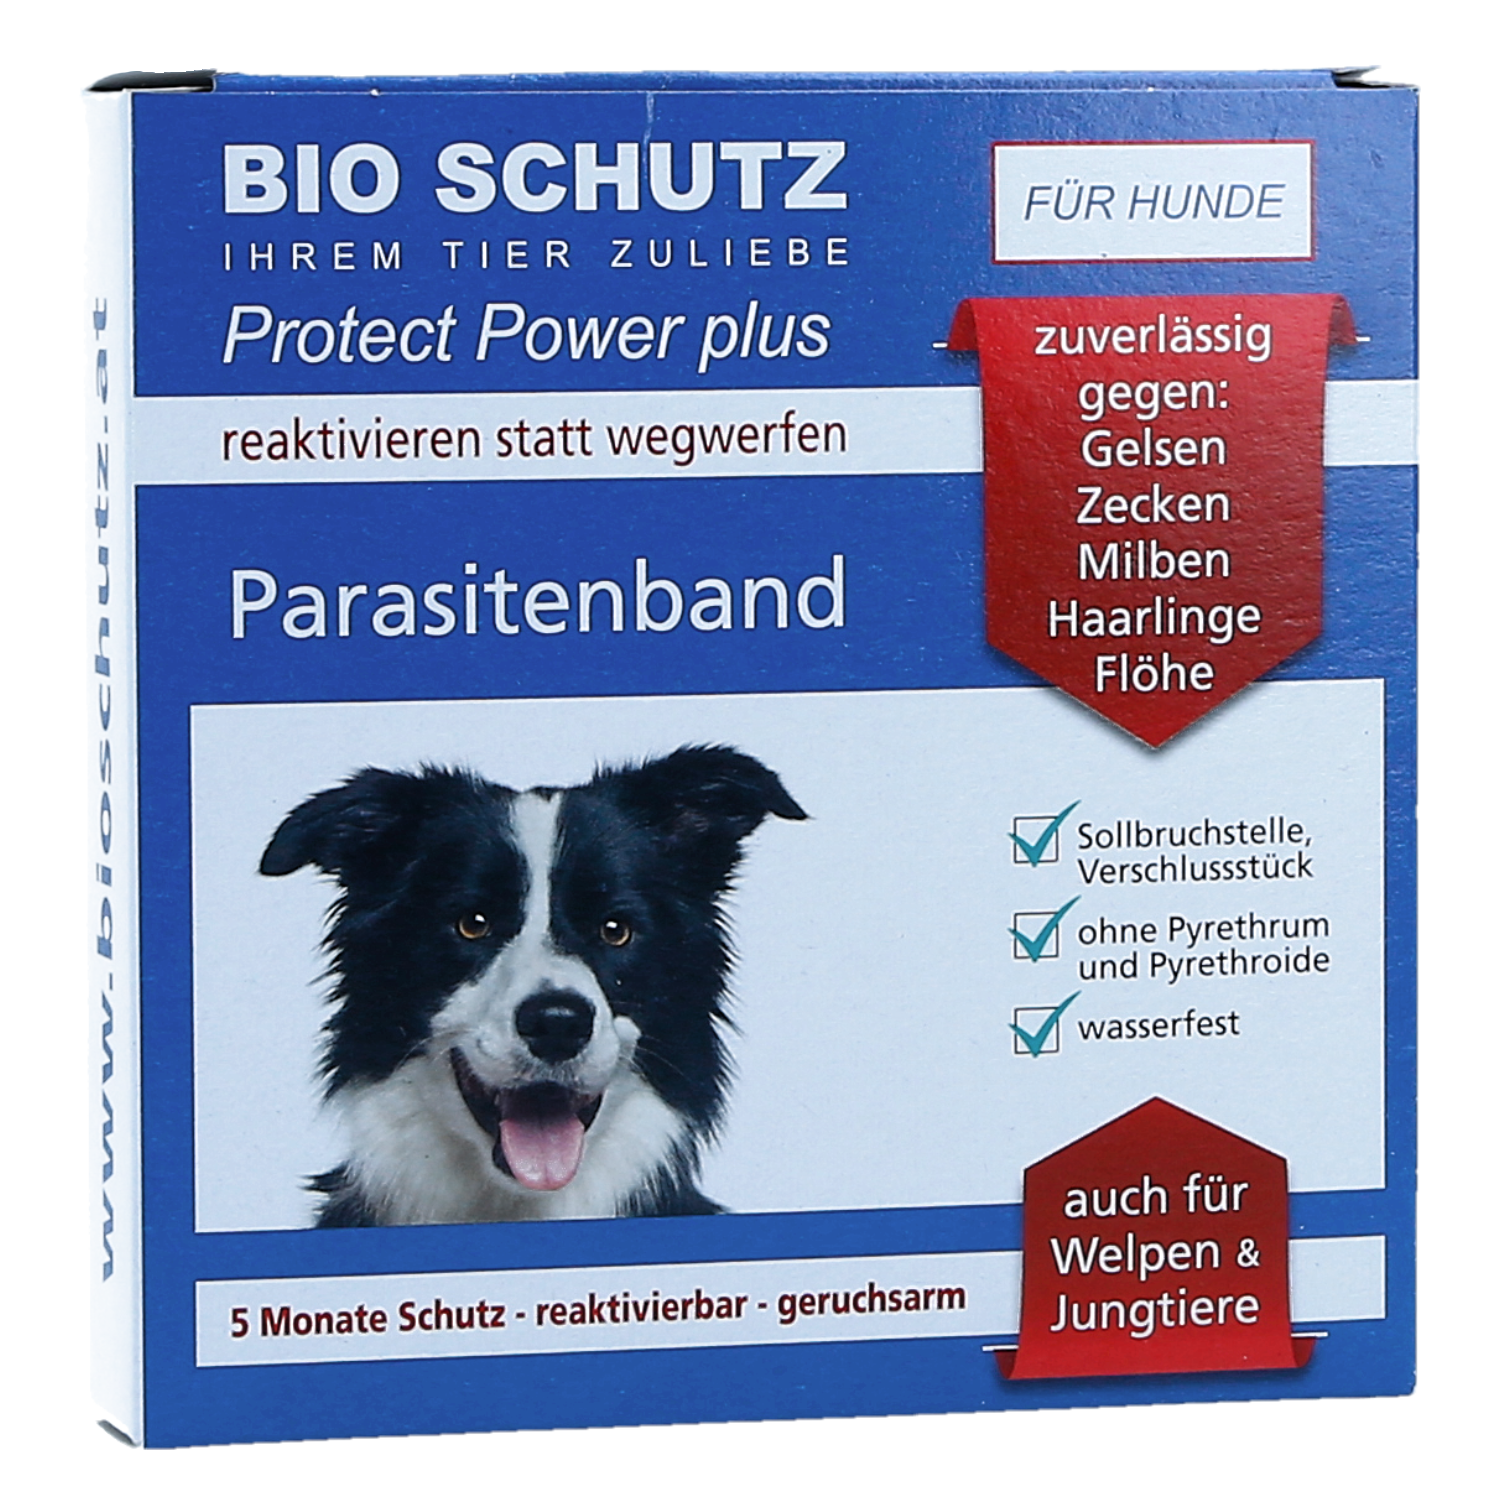 BIO SCHUTZ Parasitenband Protect Power Plus Hund Art.Nr. 384, 388